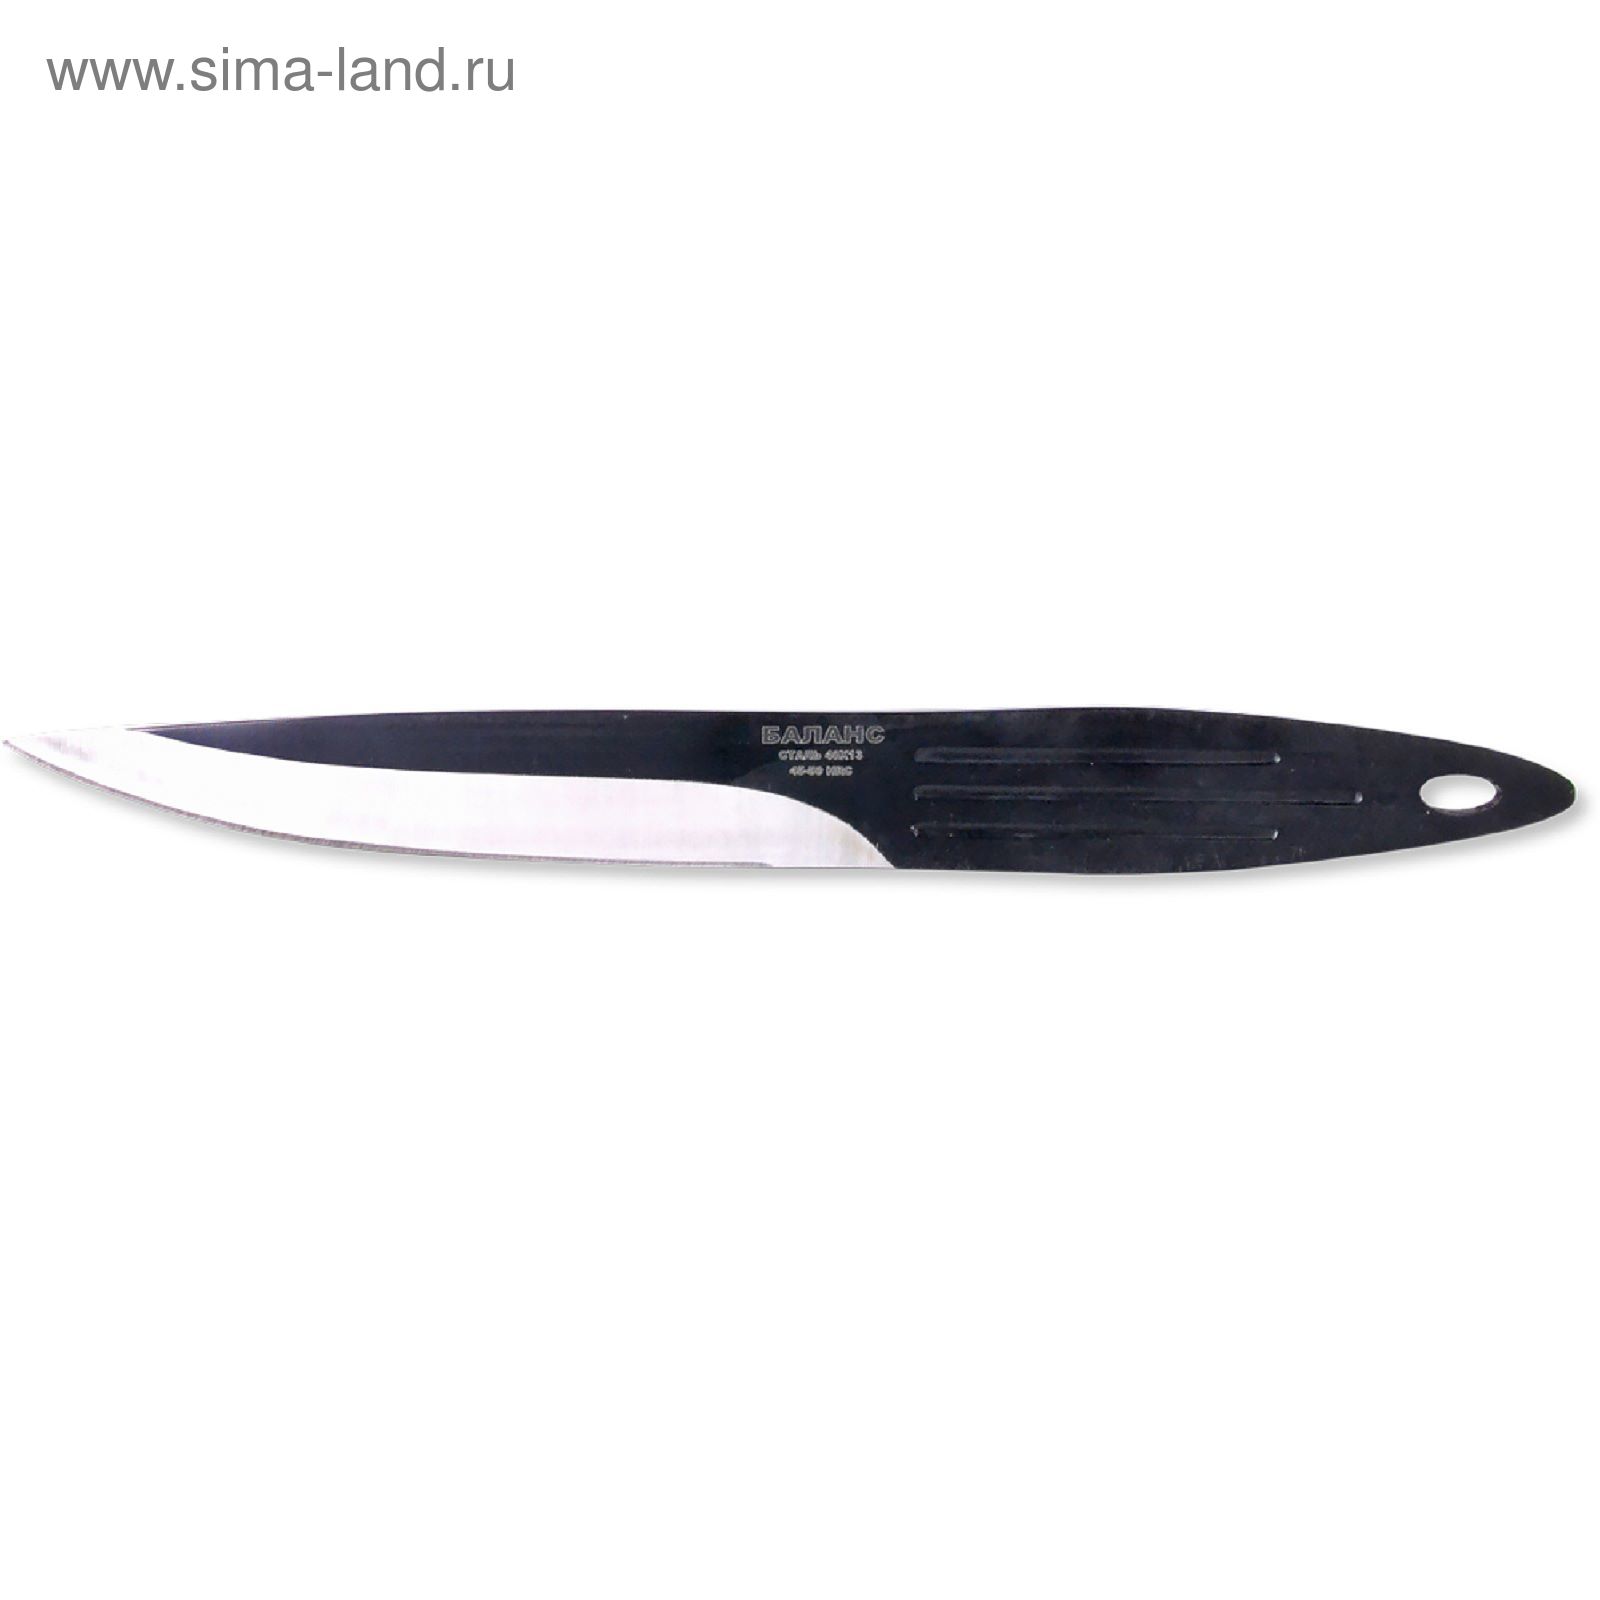 Нож метательный "Баланс" М-117-3, сталь 40х13